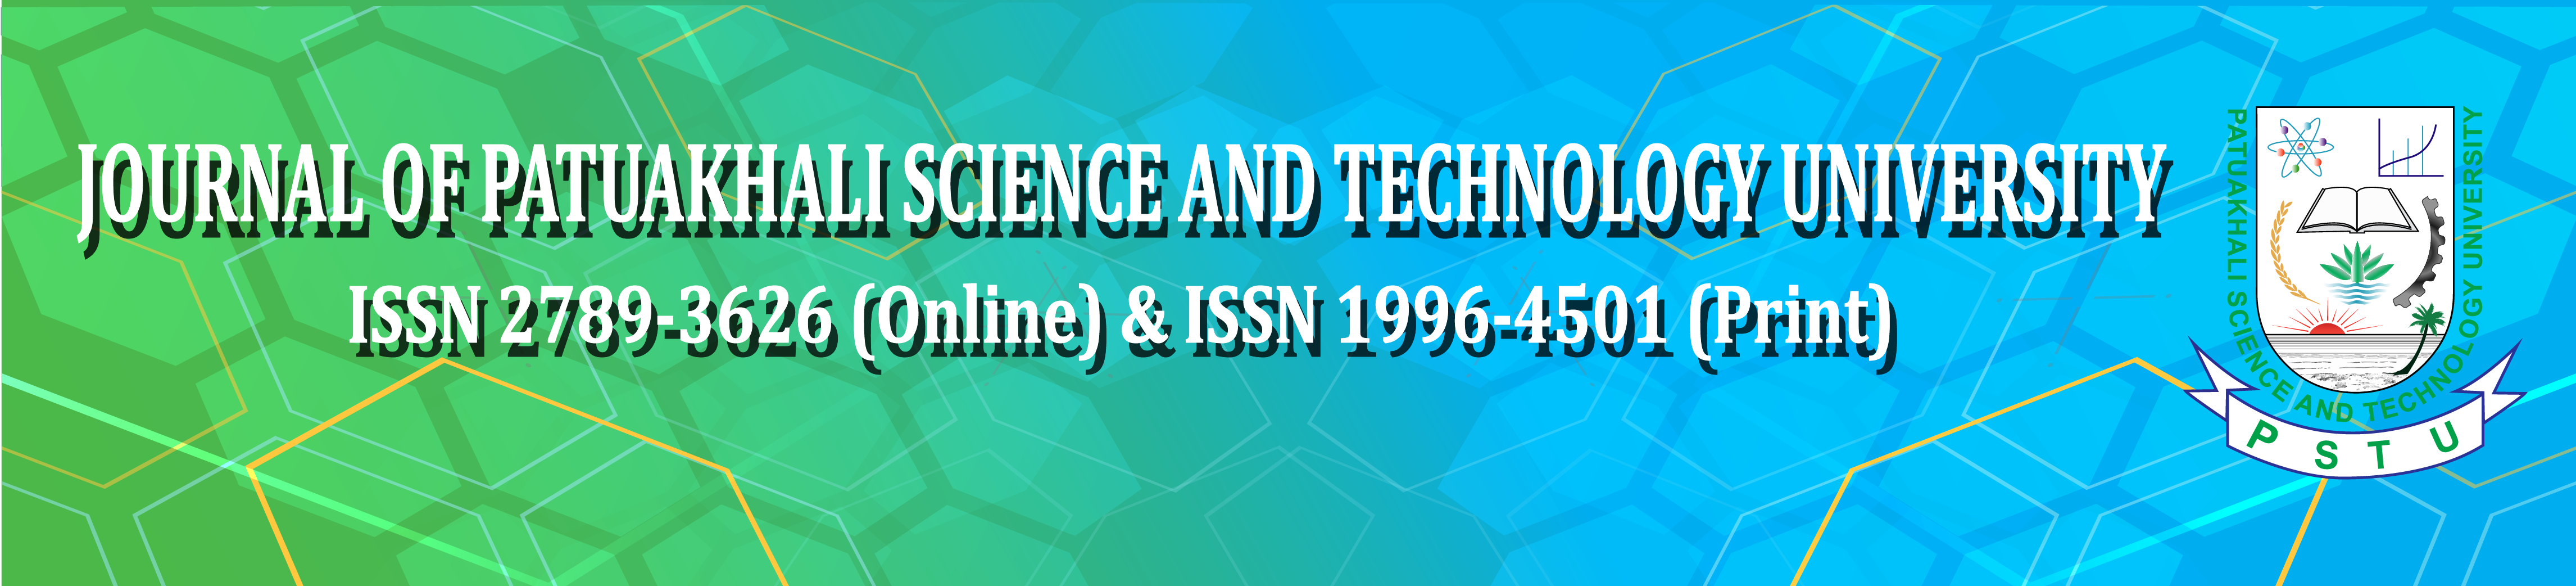 Journal of Patuakhali Science and Technology University